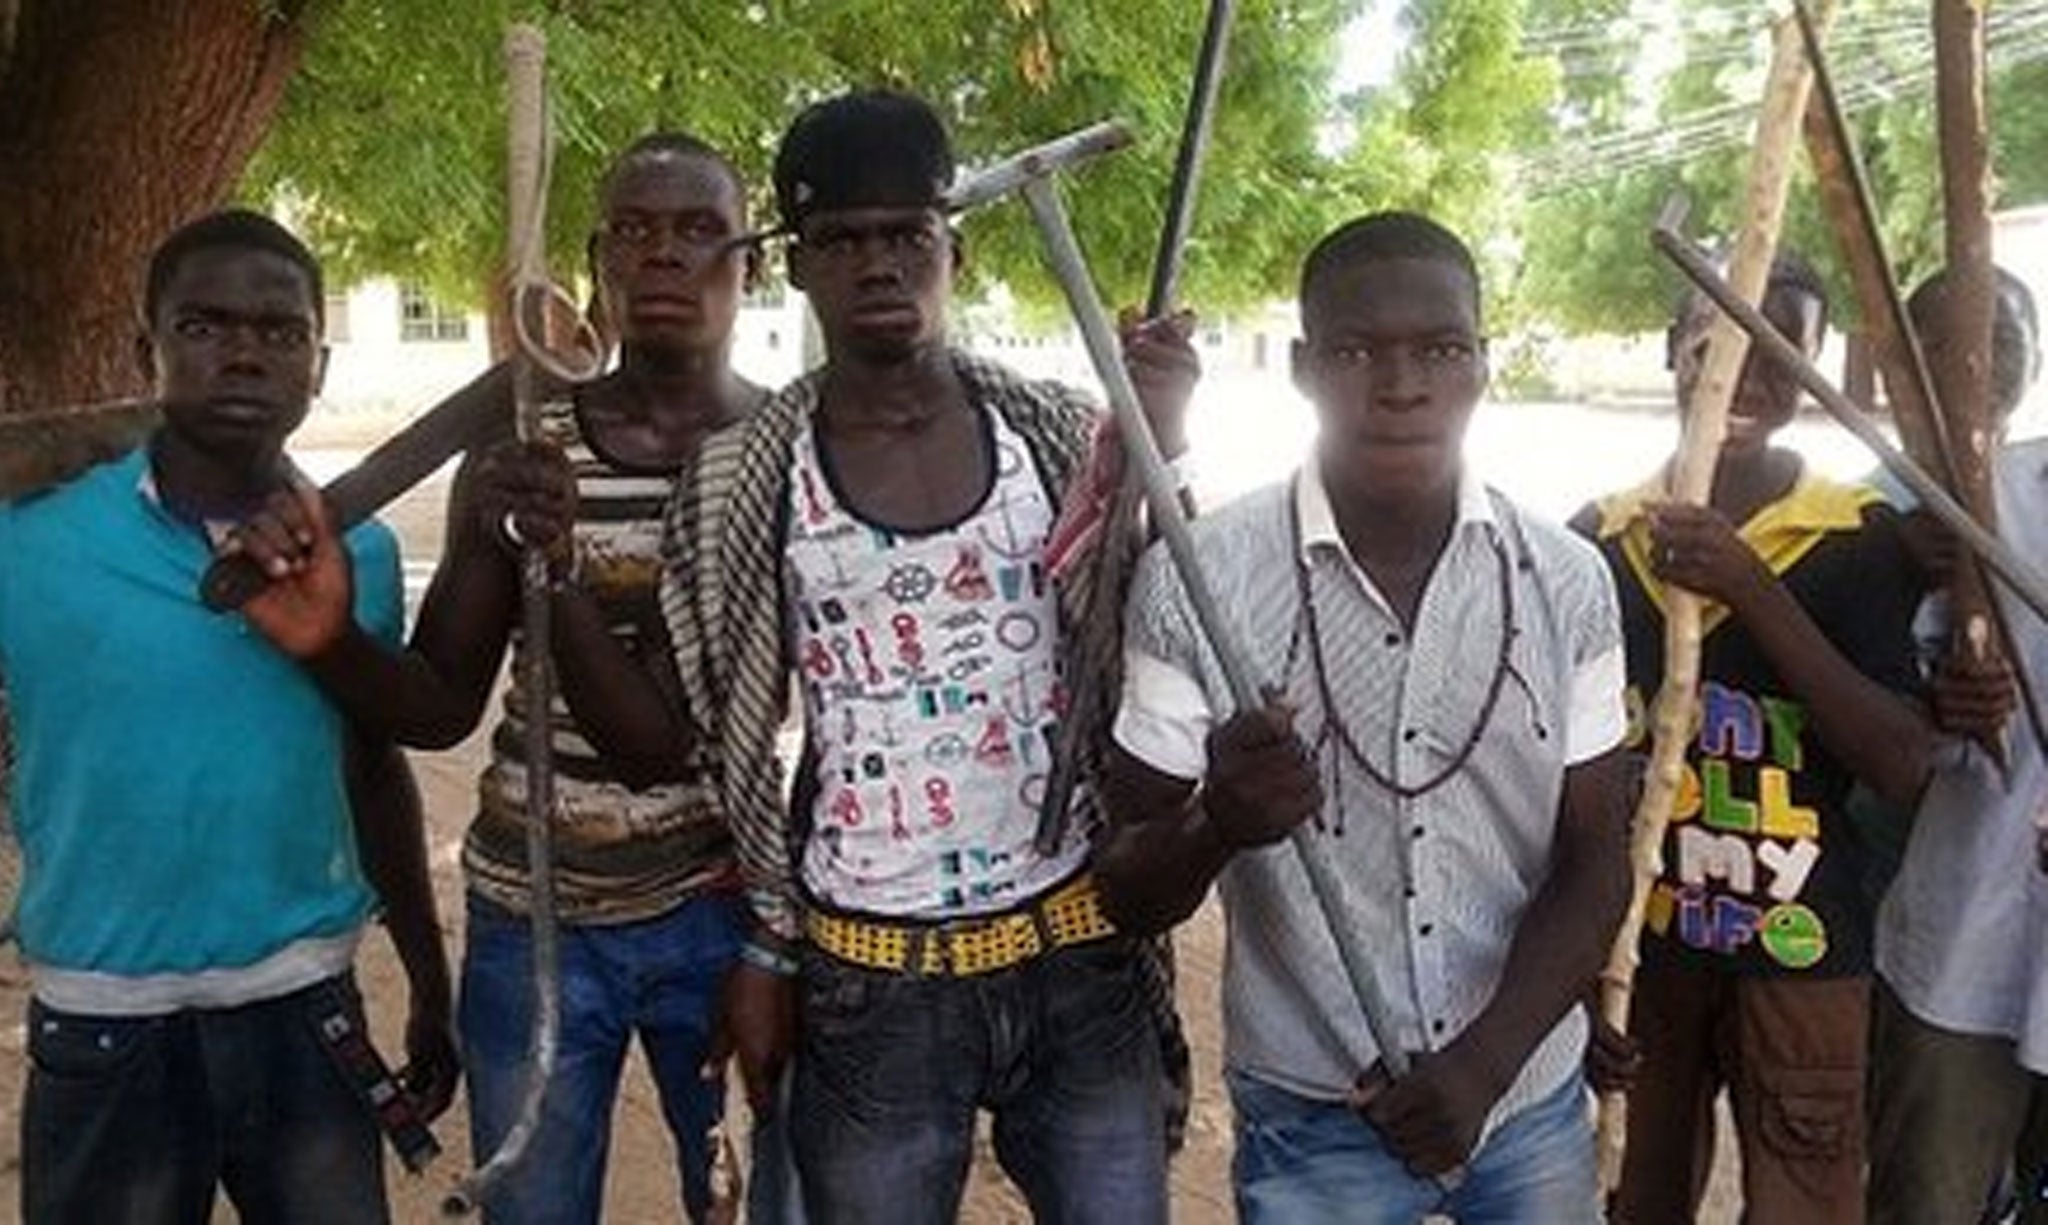 Young vigilantes in Maiduguri have been targeting suspected militants